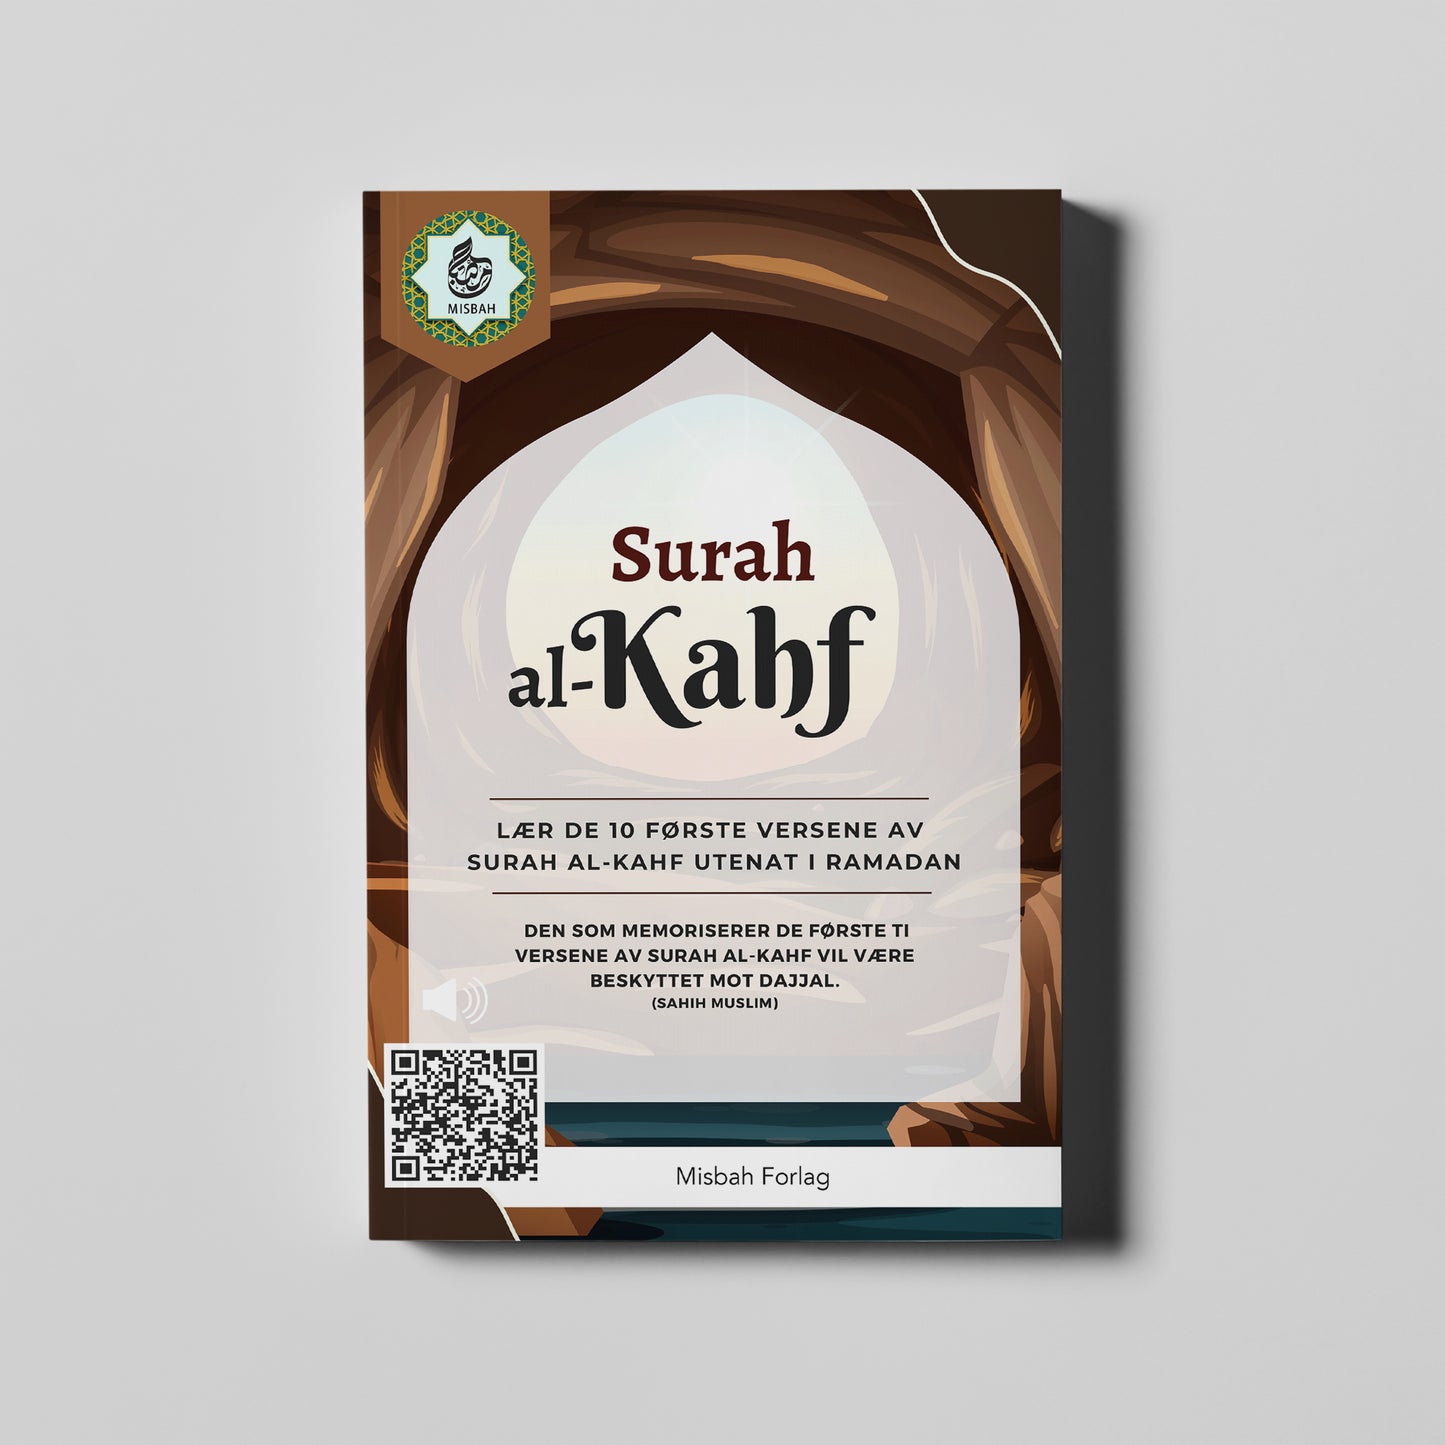 Surah al-Kahf